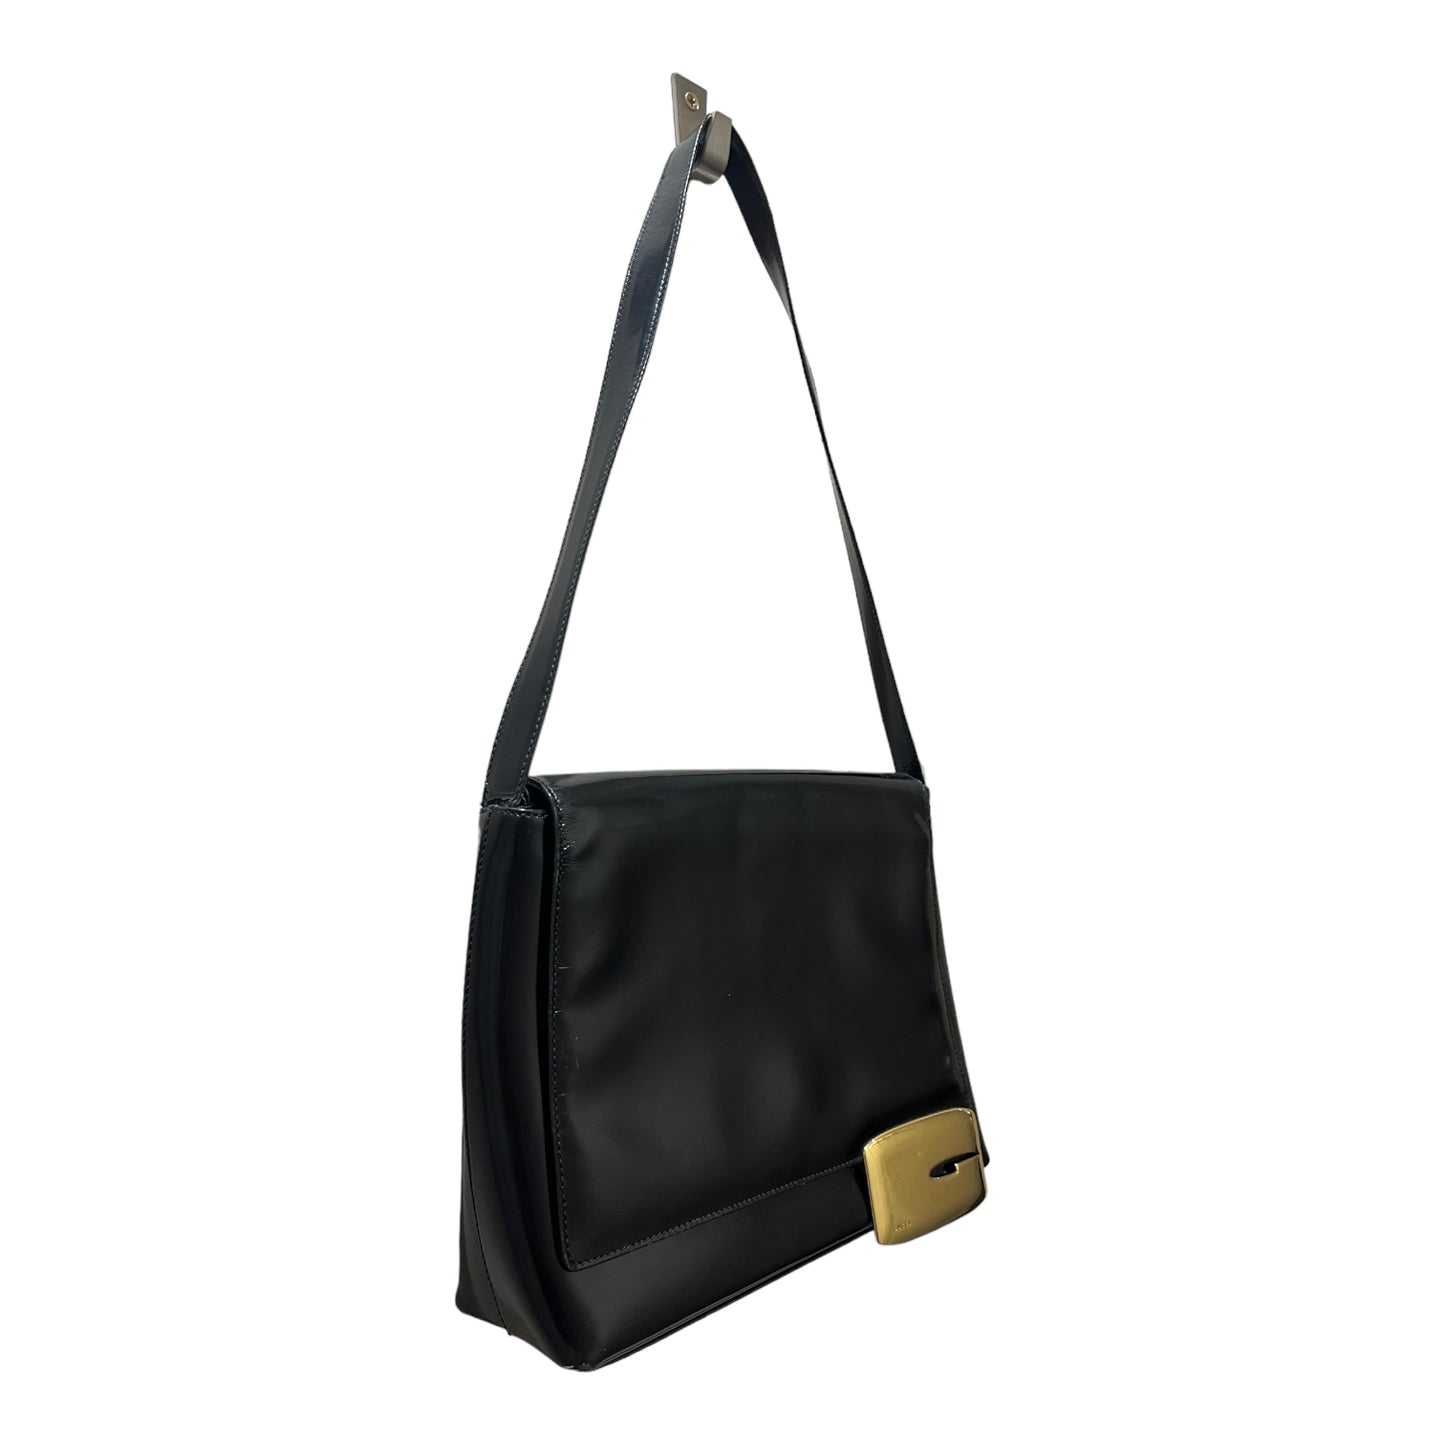 Gucci Black Patent Bag